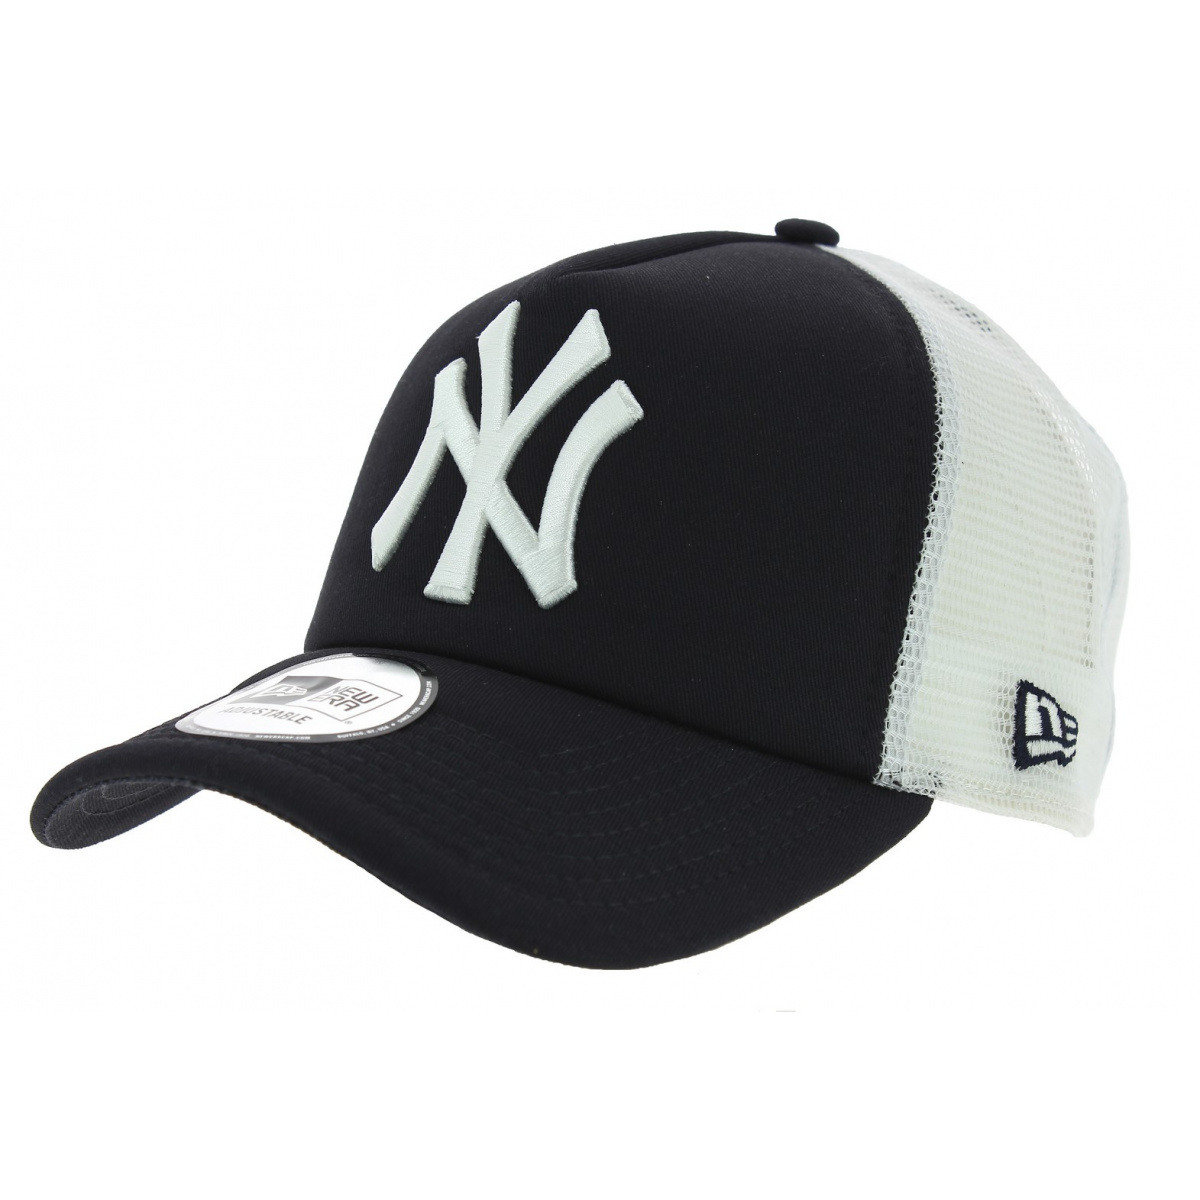 Trucker Snapback Cap Clean Yankees of NY - New Era Reference